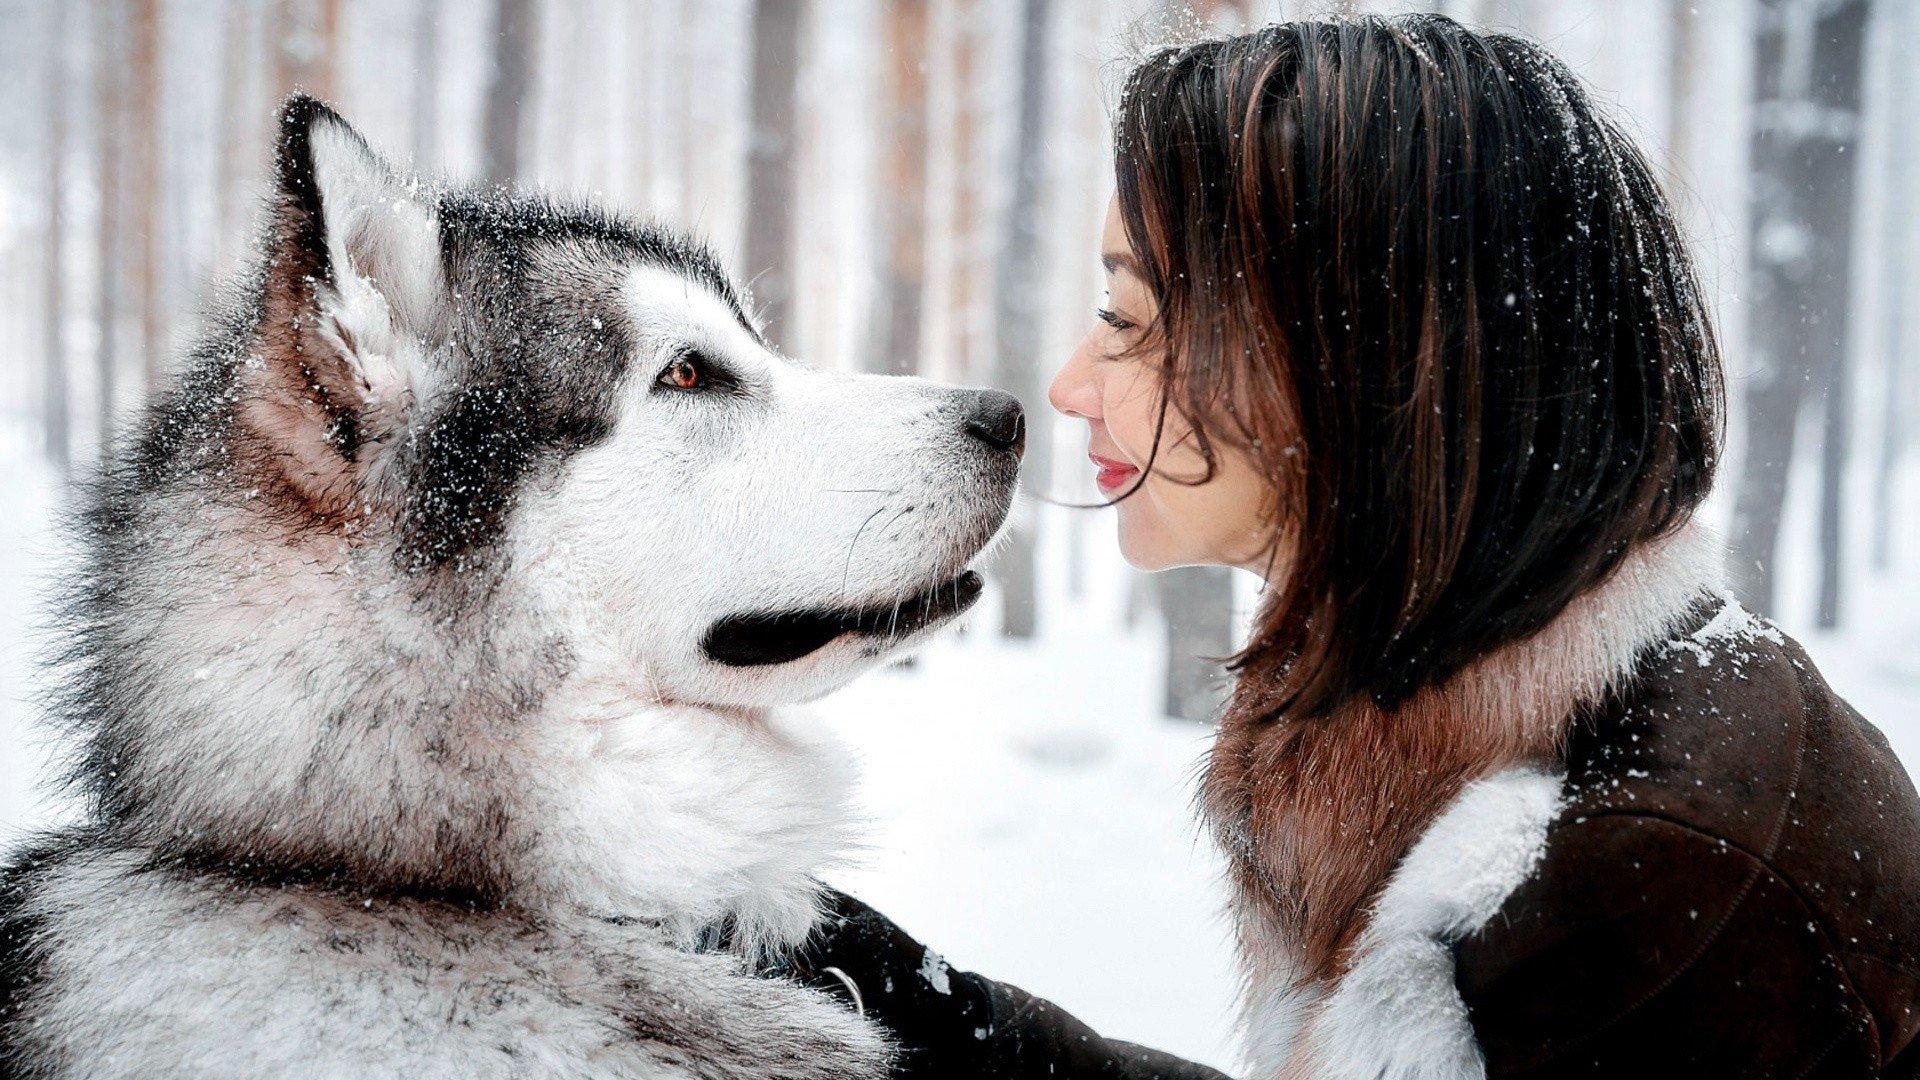 animals, Women outdoors, Smiling, Alaskan Malamute, Water, Dog